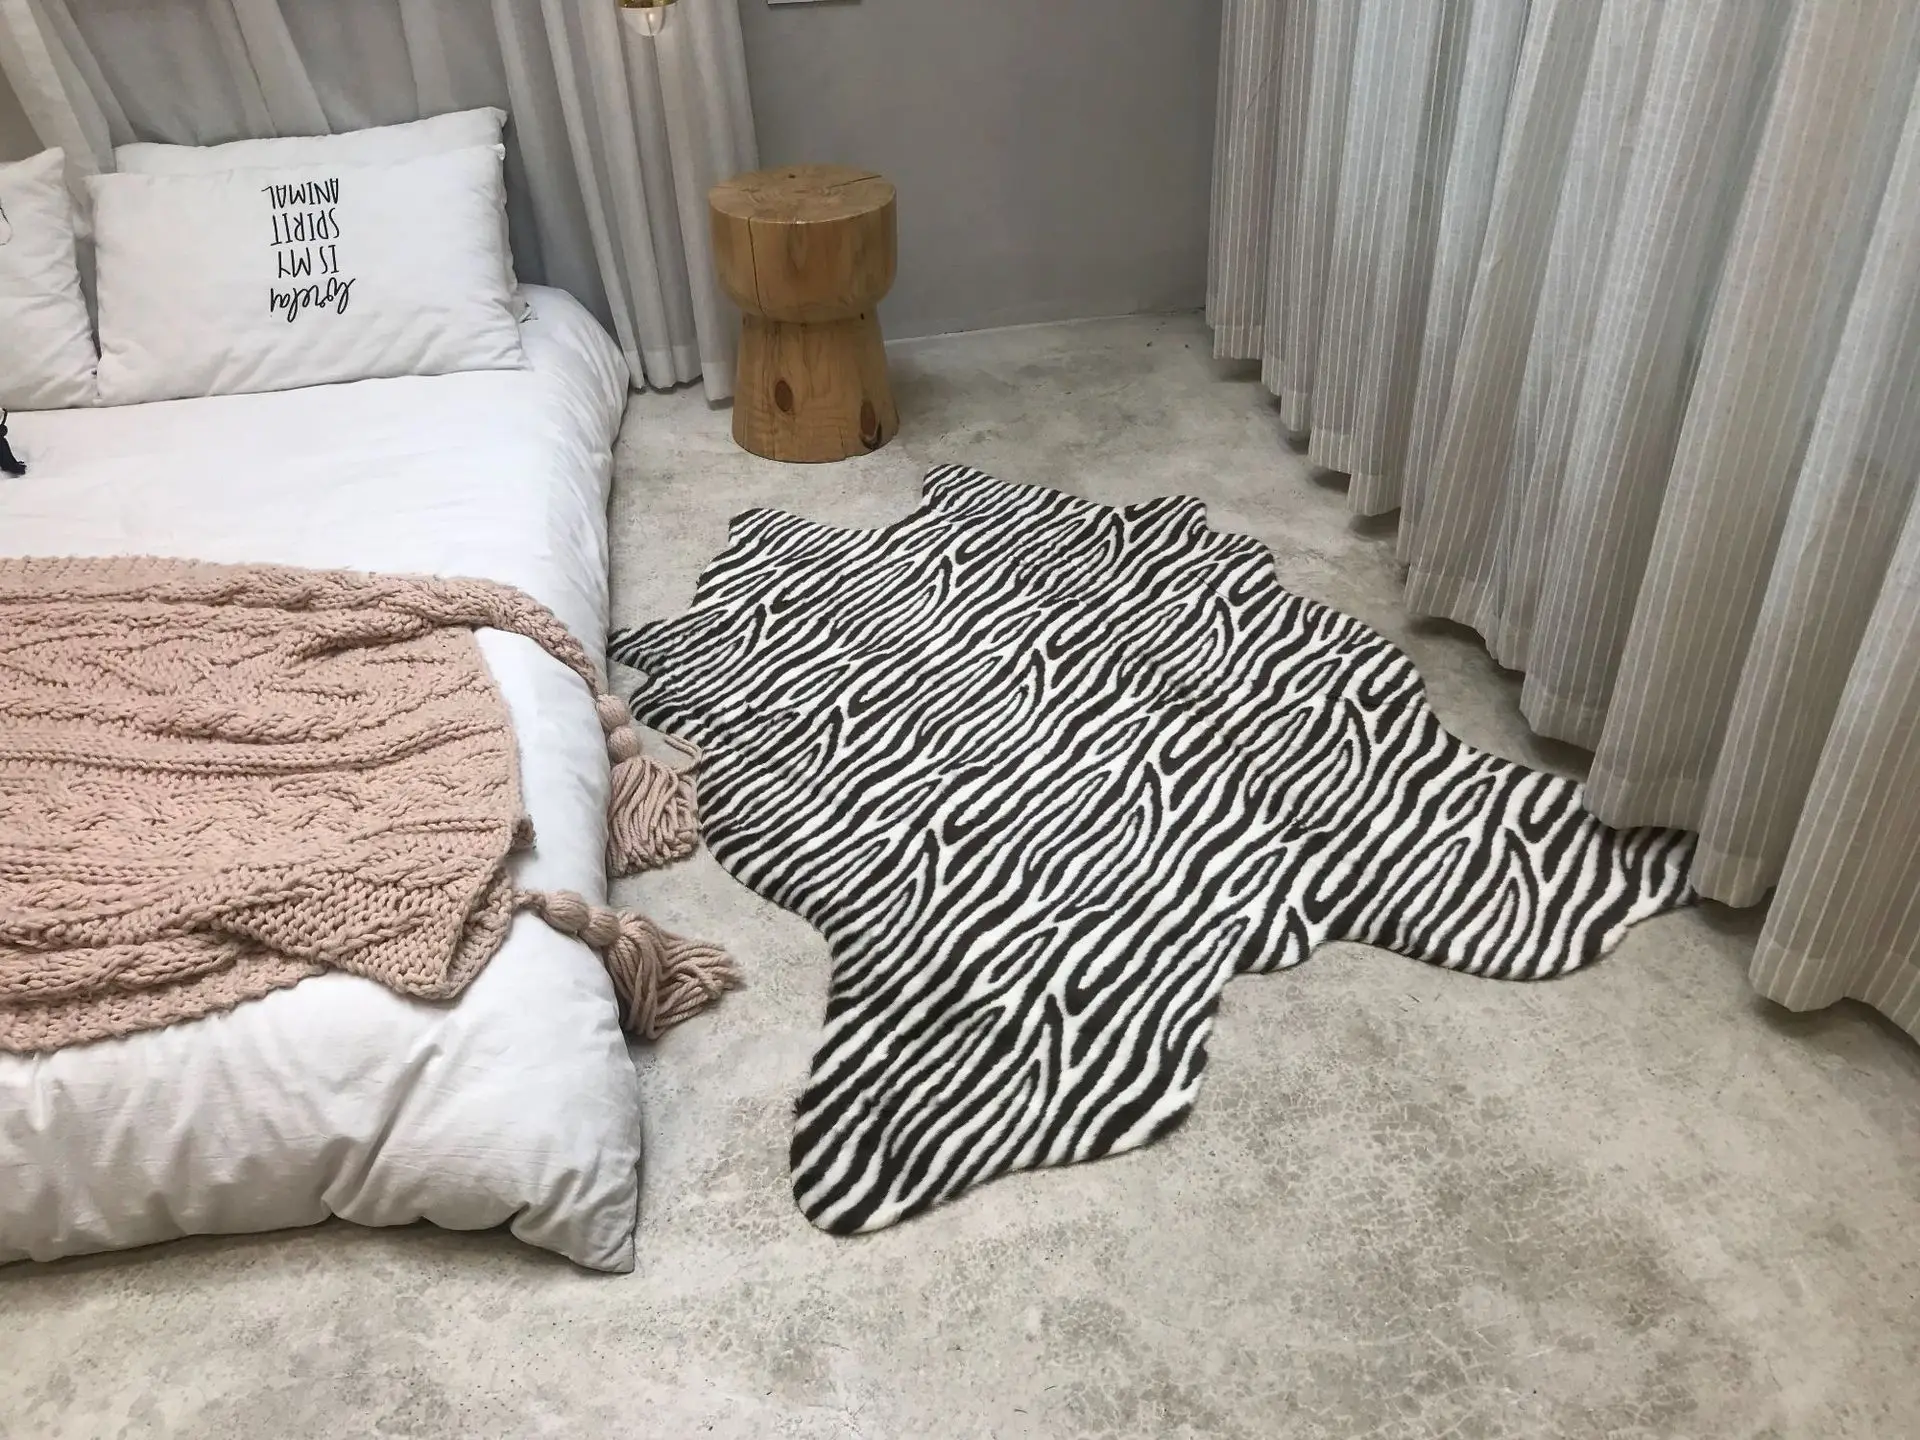 
Popular cow Shape Carpet Living Room Decor /zebra print rug and natural latex faux fur carpet 